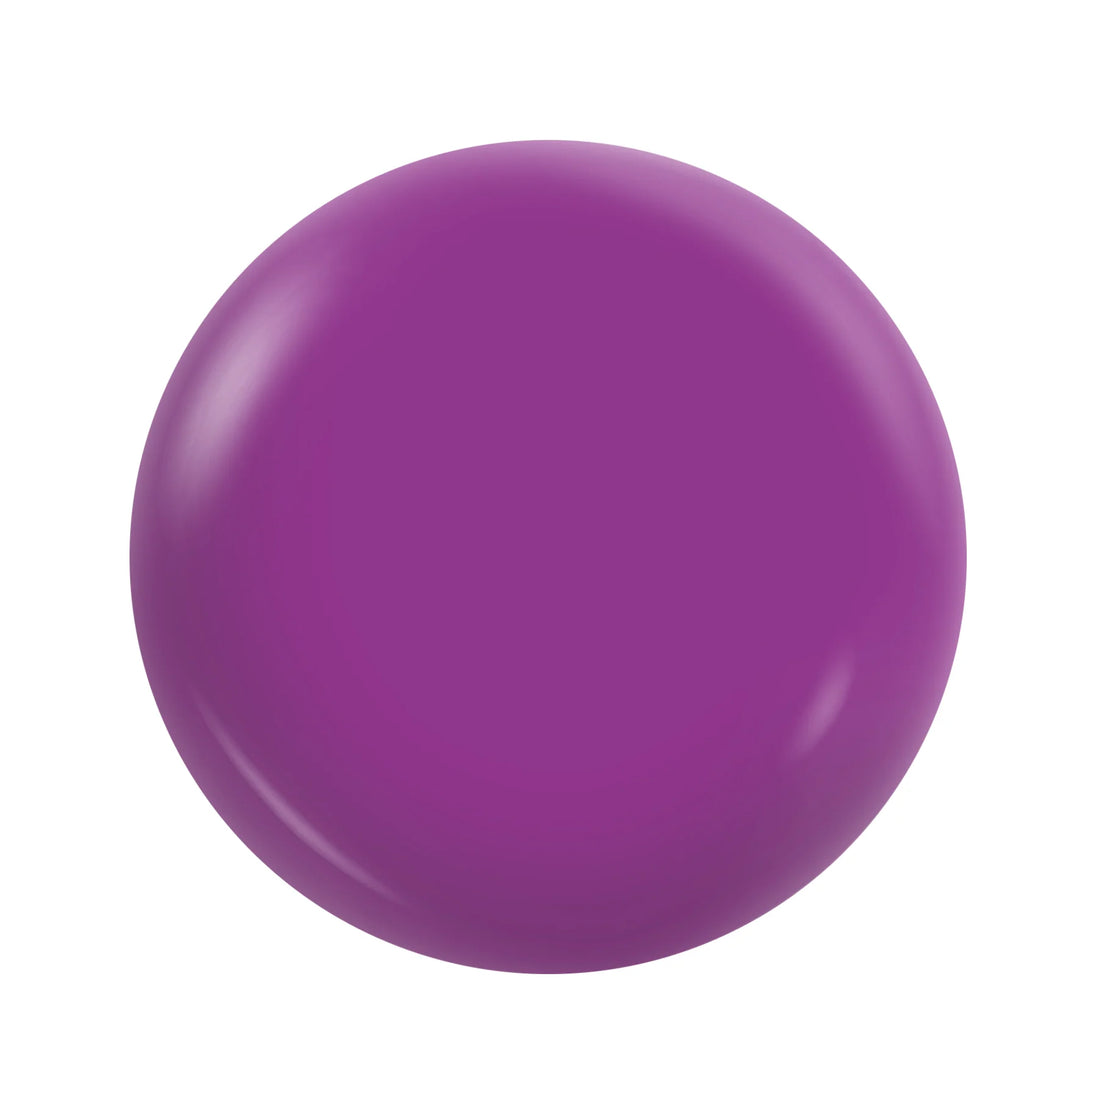 M 014 - Notpolish Smoked Purple